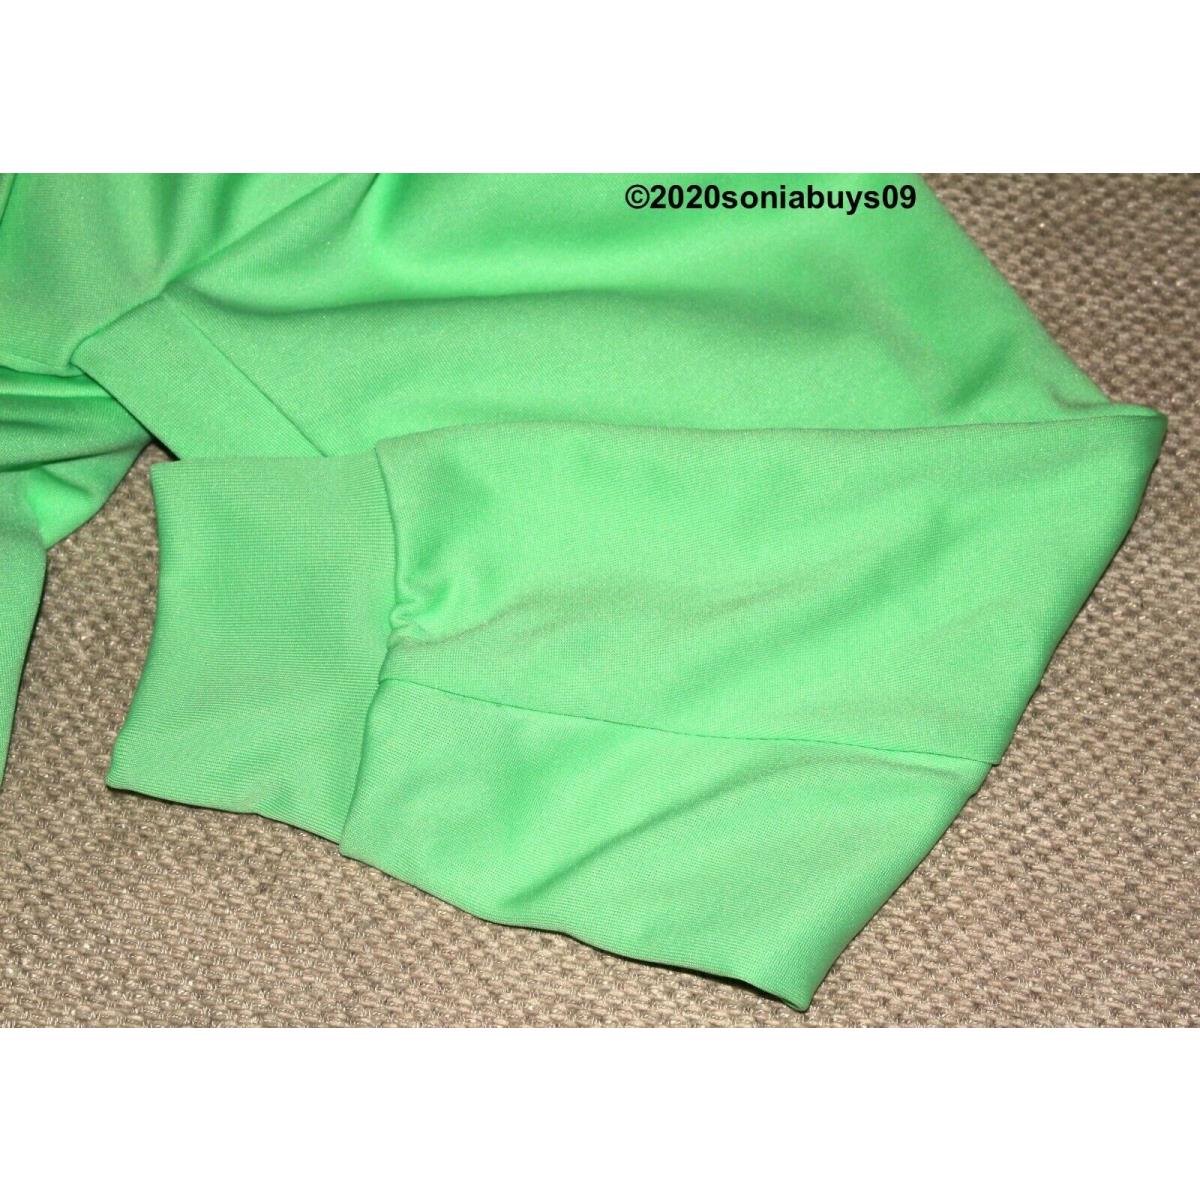 Adidas clothing  - Glow Mint Green 9